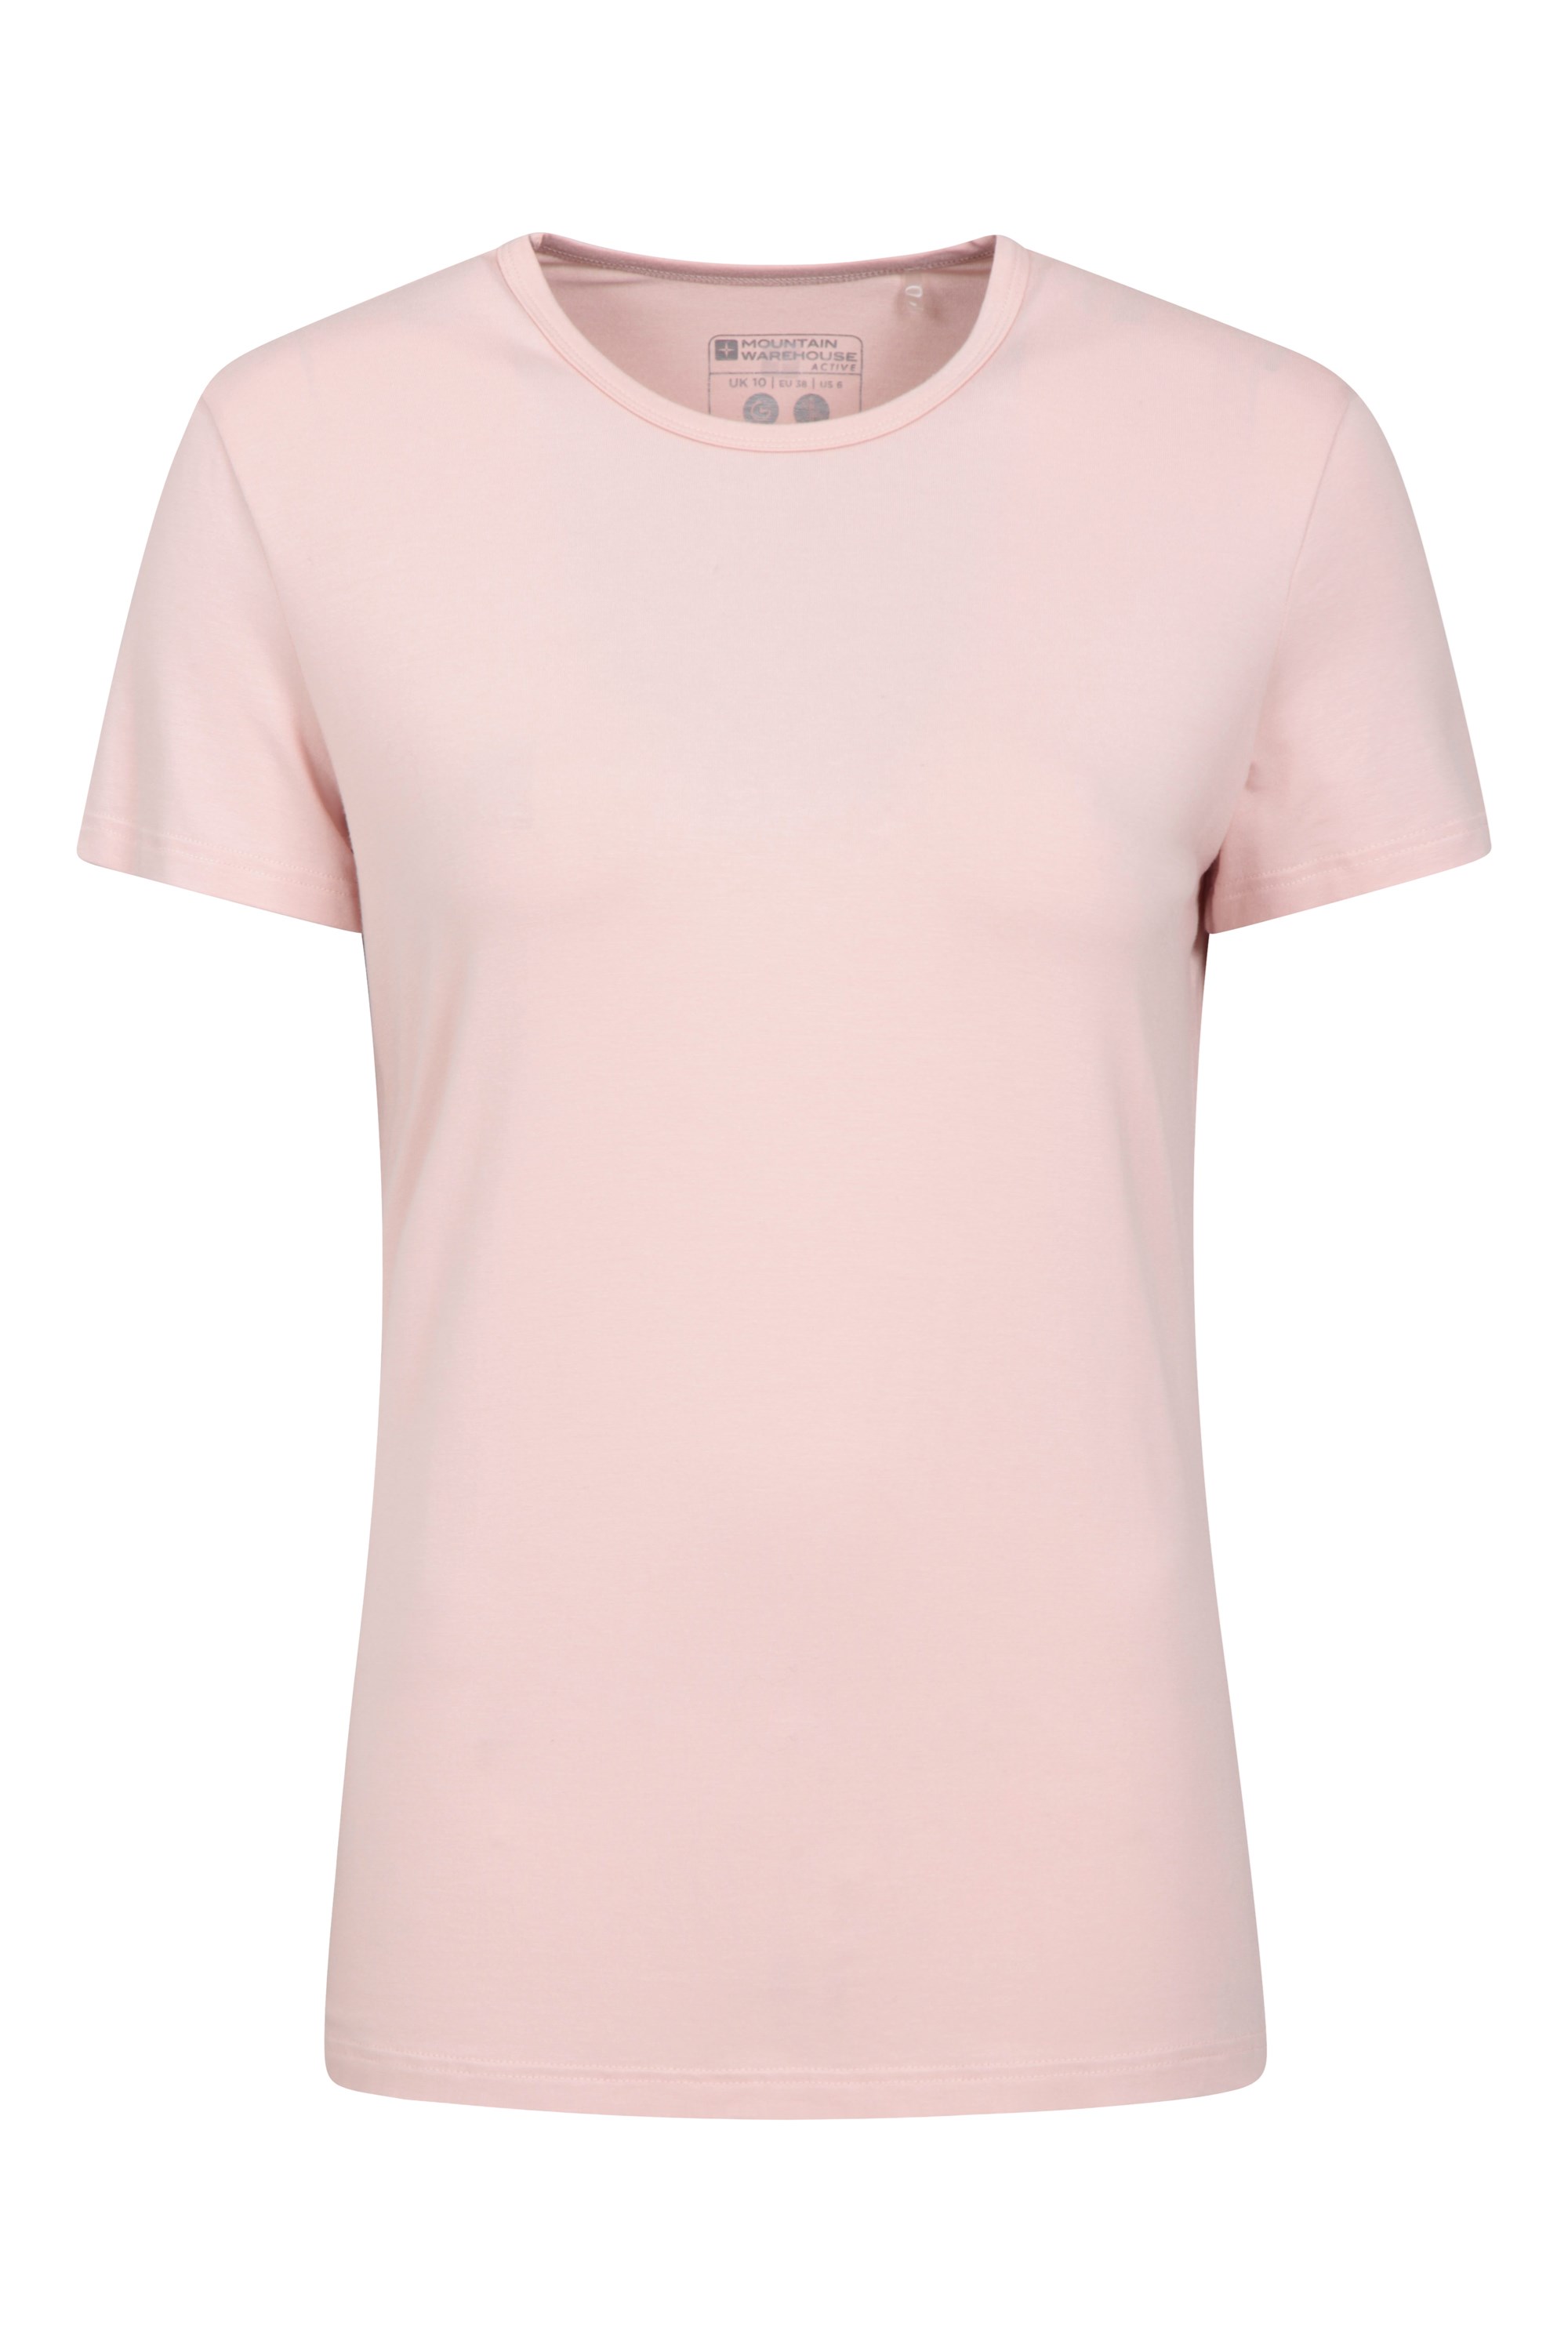 Mountain Warehouse Camiseta Endurance para Mujer para Correr Viajar e IR al Gimnasio Top de Verano IsoCool para Mujer Camiseta con protección Solar UV UPF30+ 